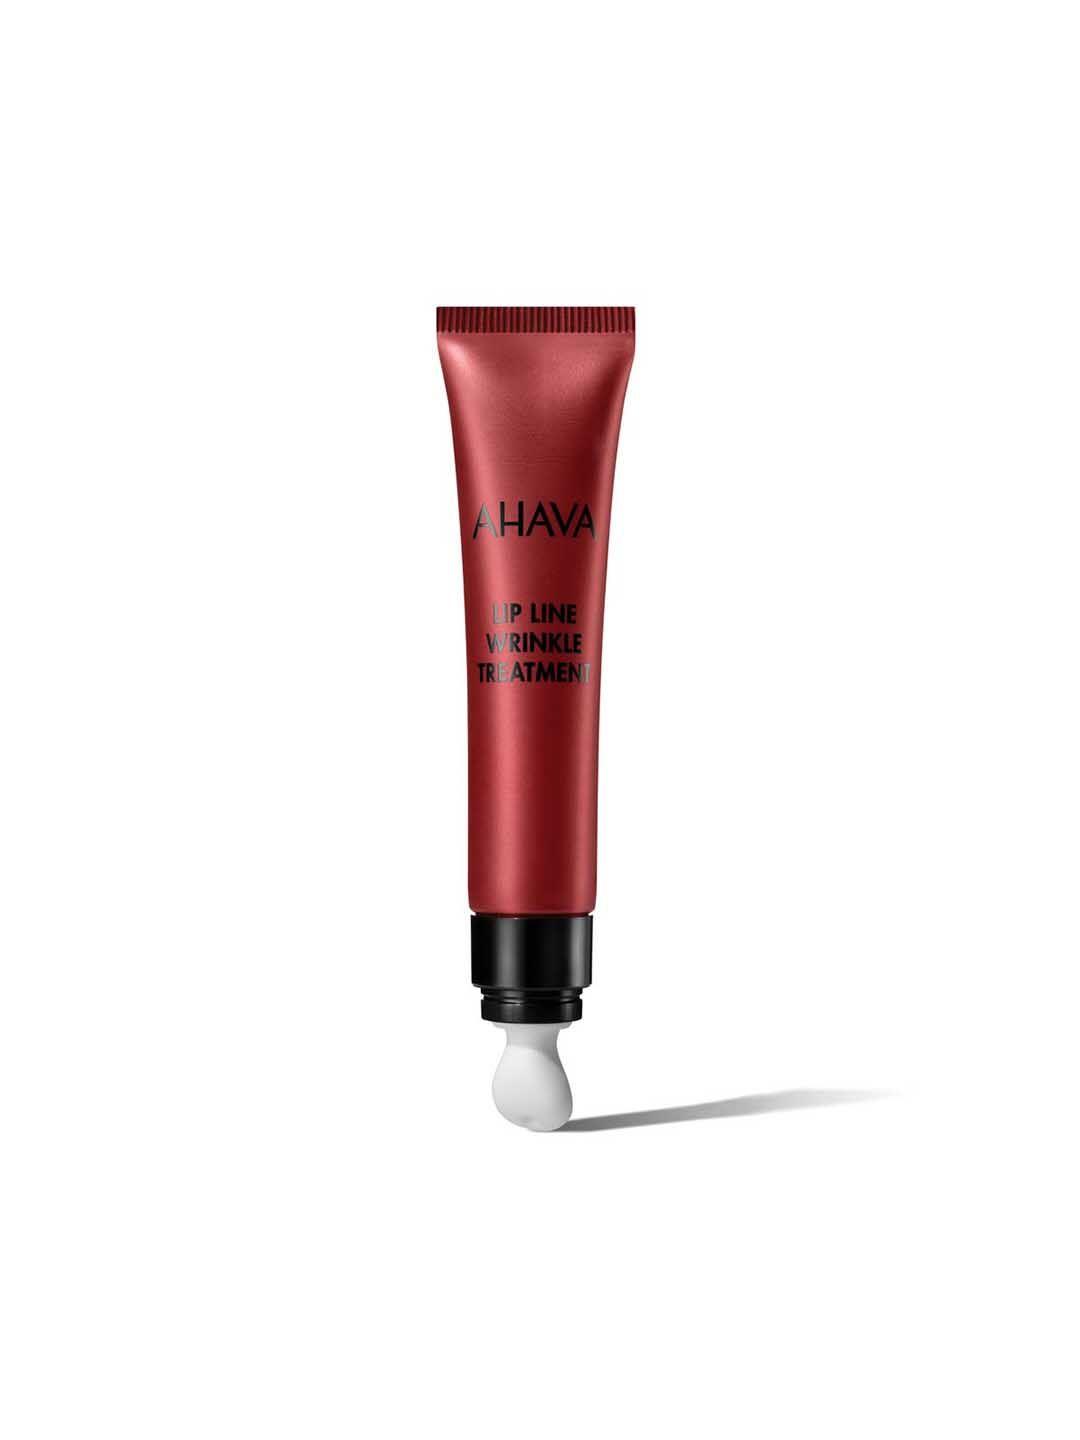 ahava-lip-line-wrinkle-treatment-to-hydrate-&-volumize-the-lips---15ml